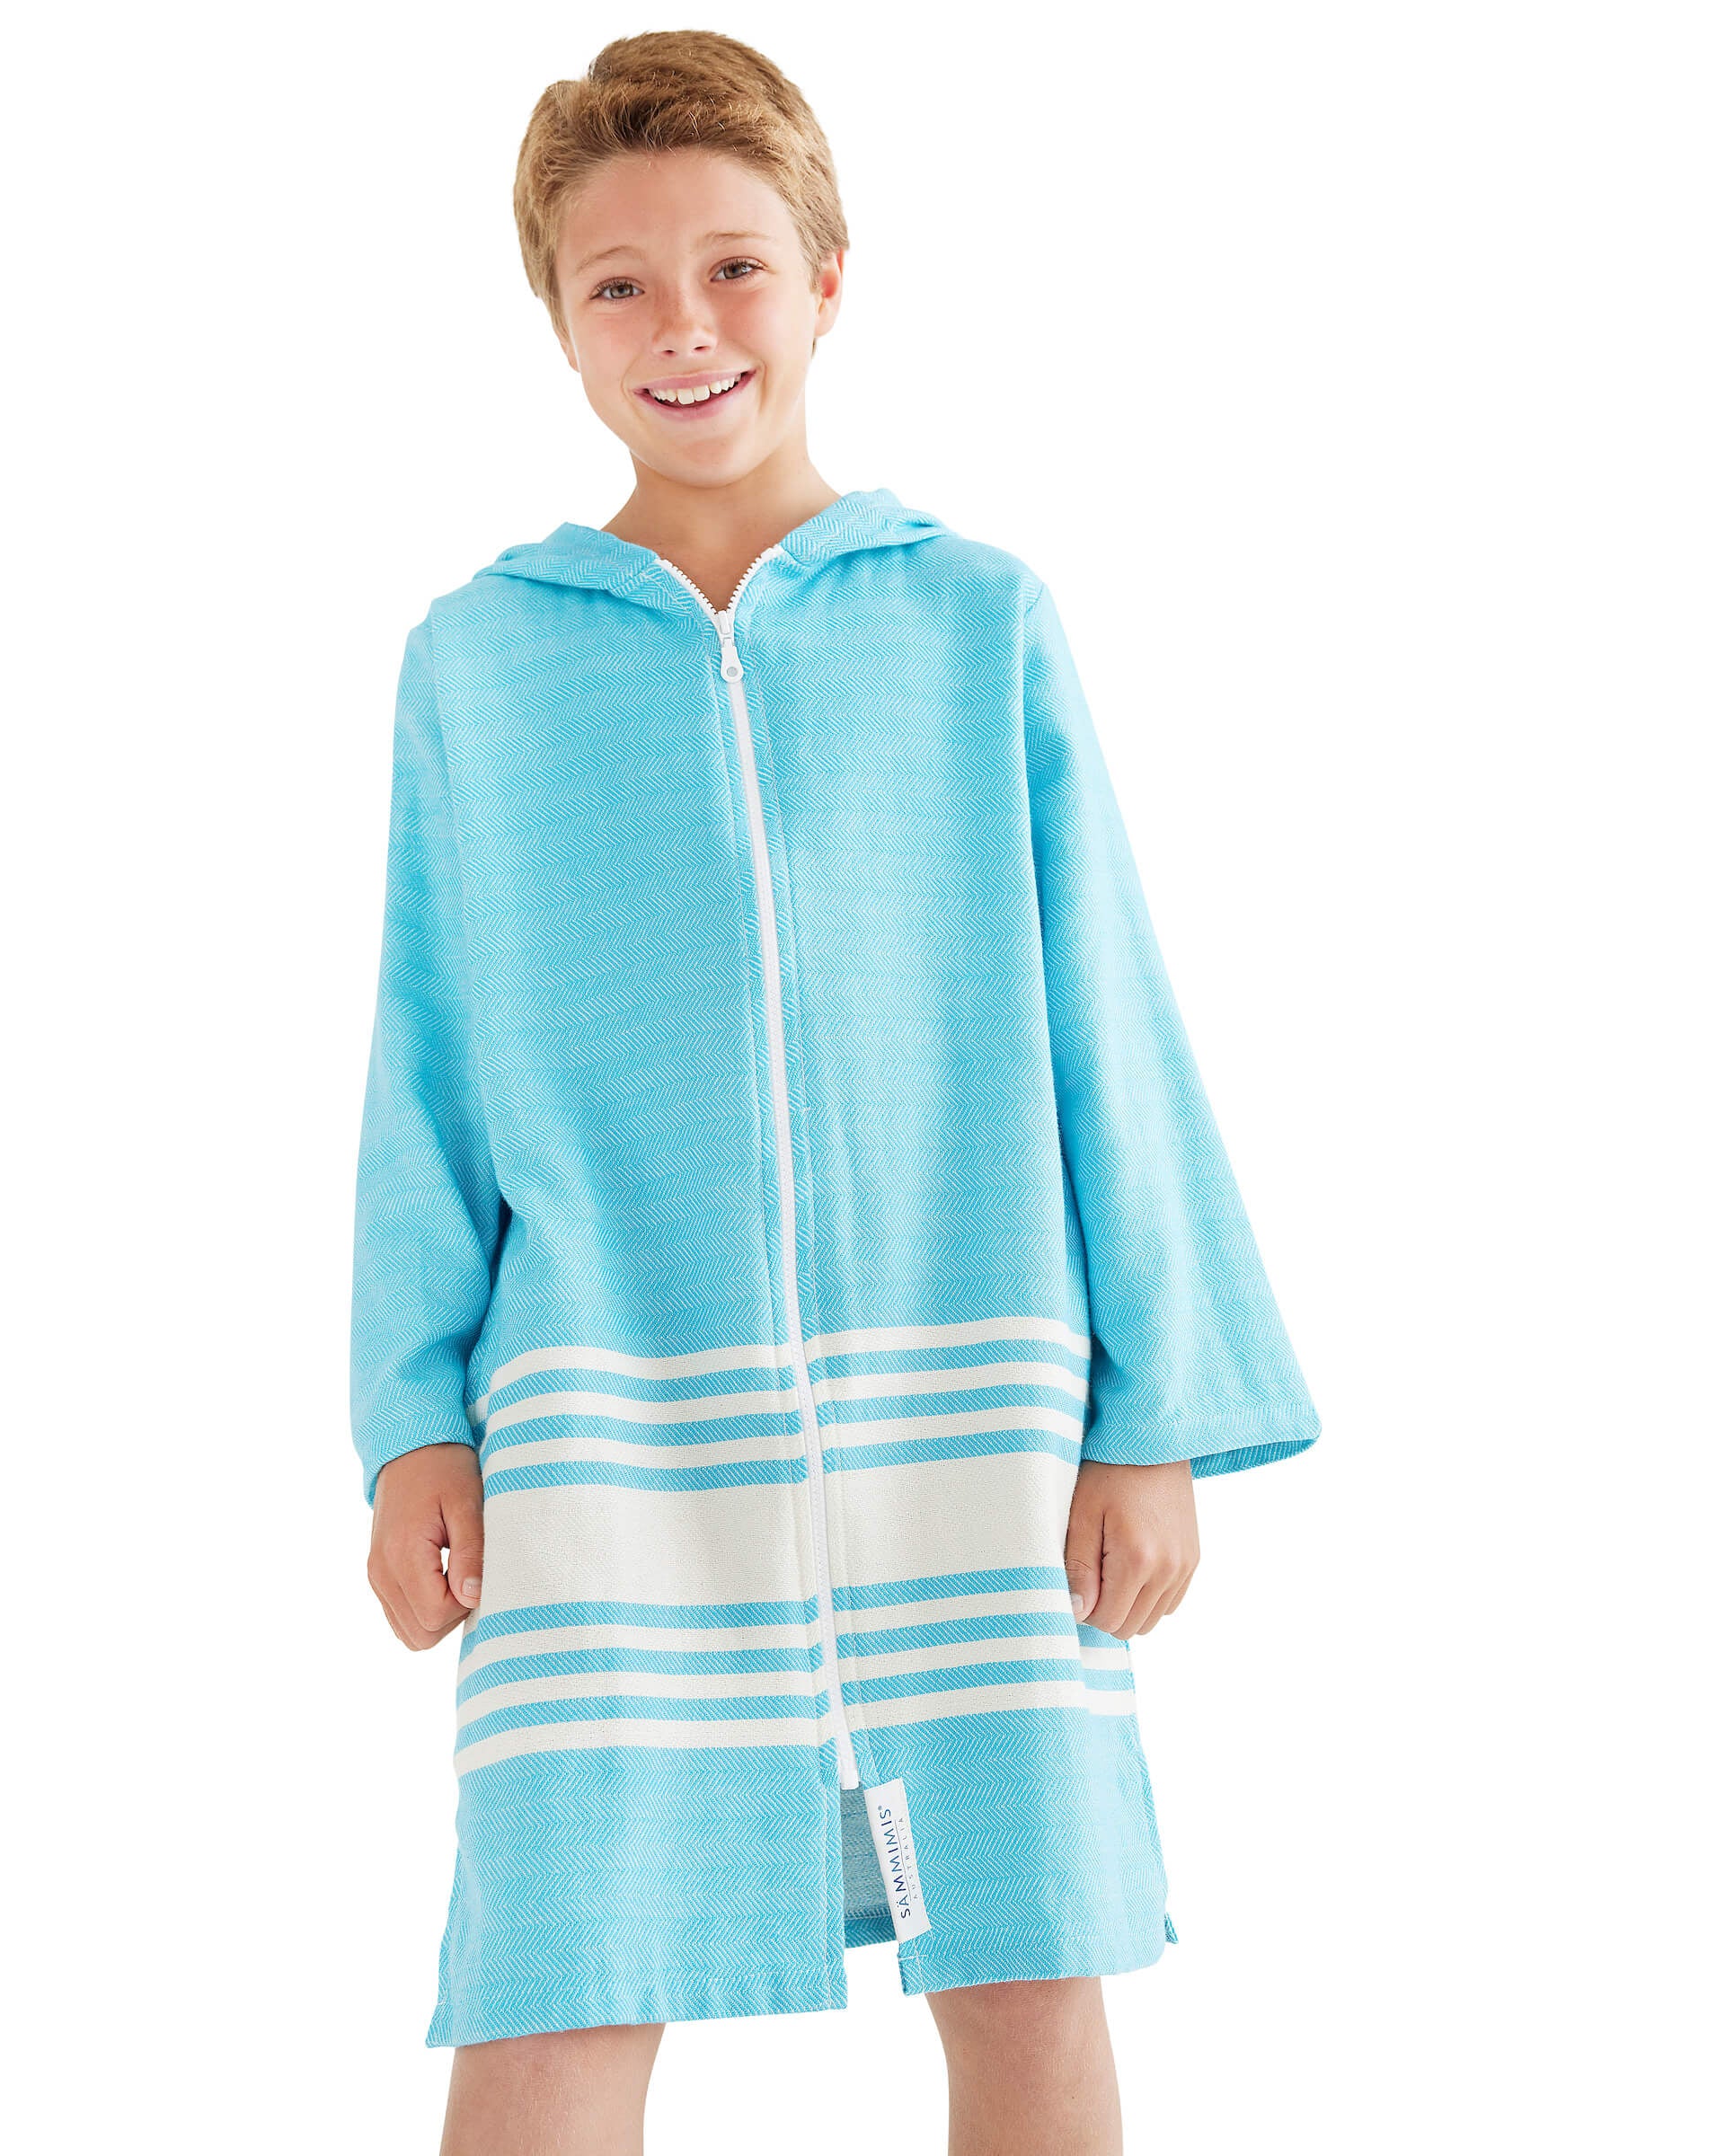 TASSOS Kids Hooded Towel: Aqua/White